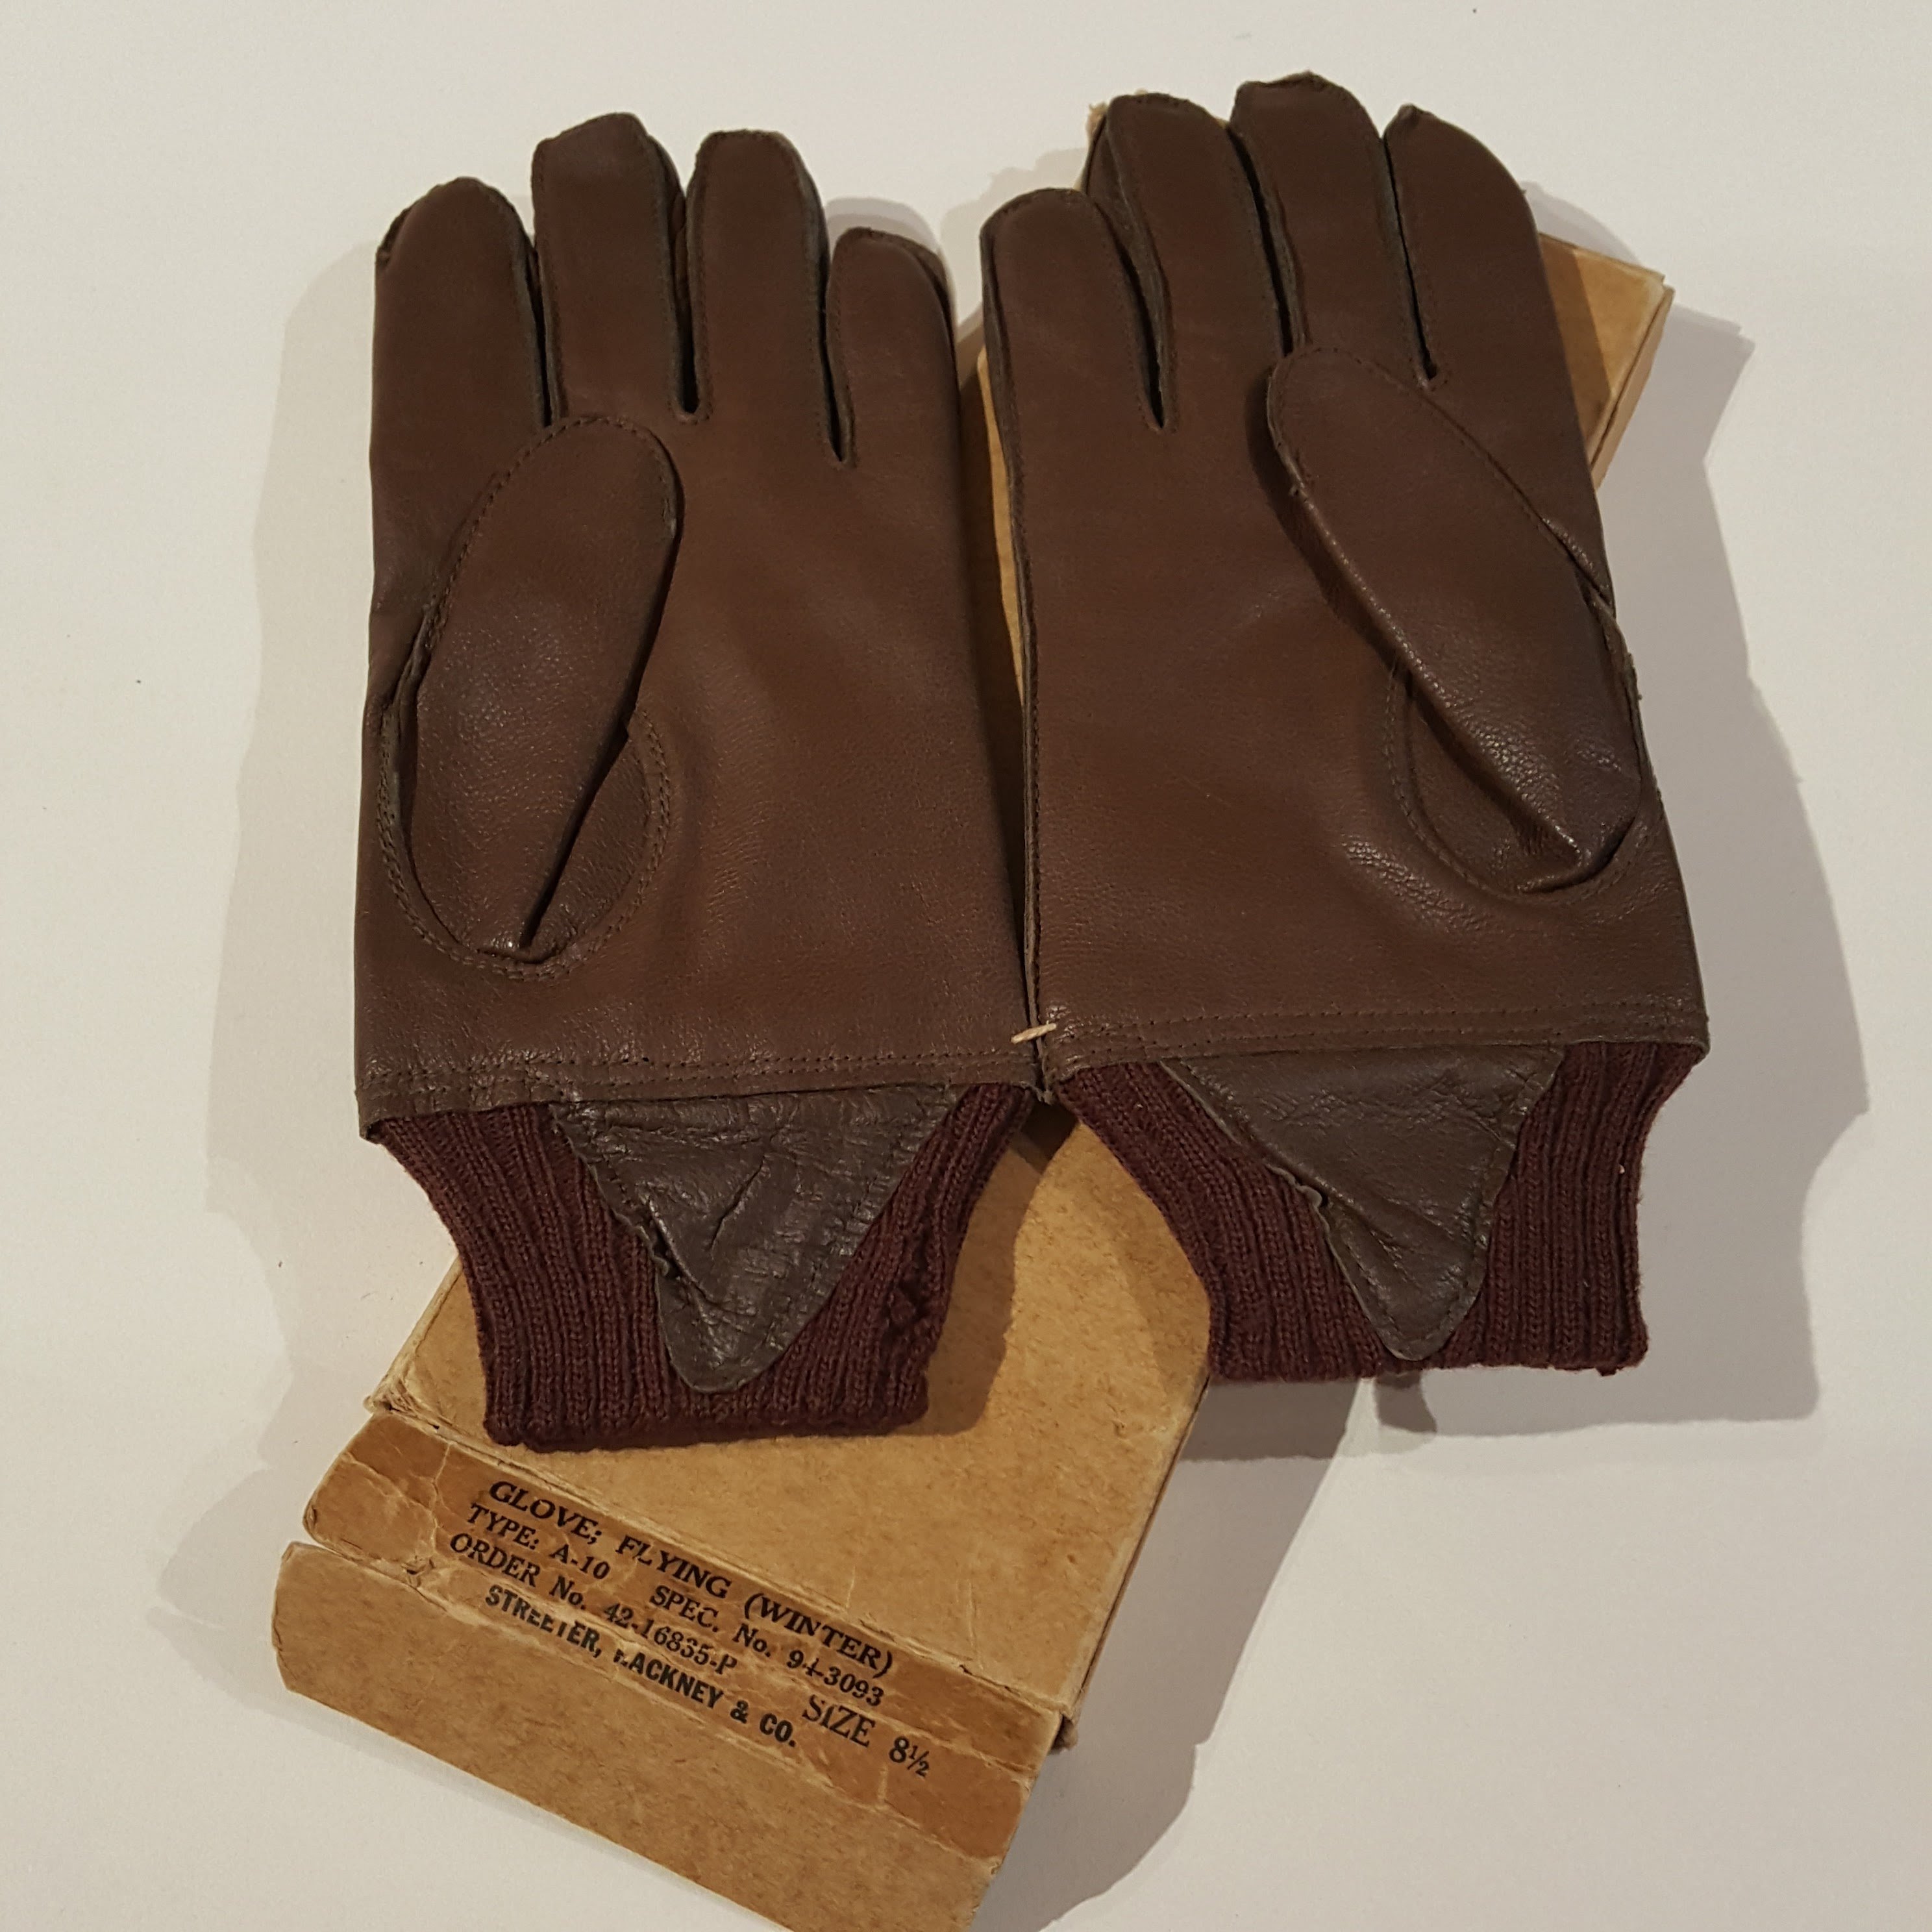 glove maker name